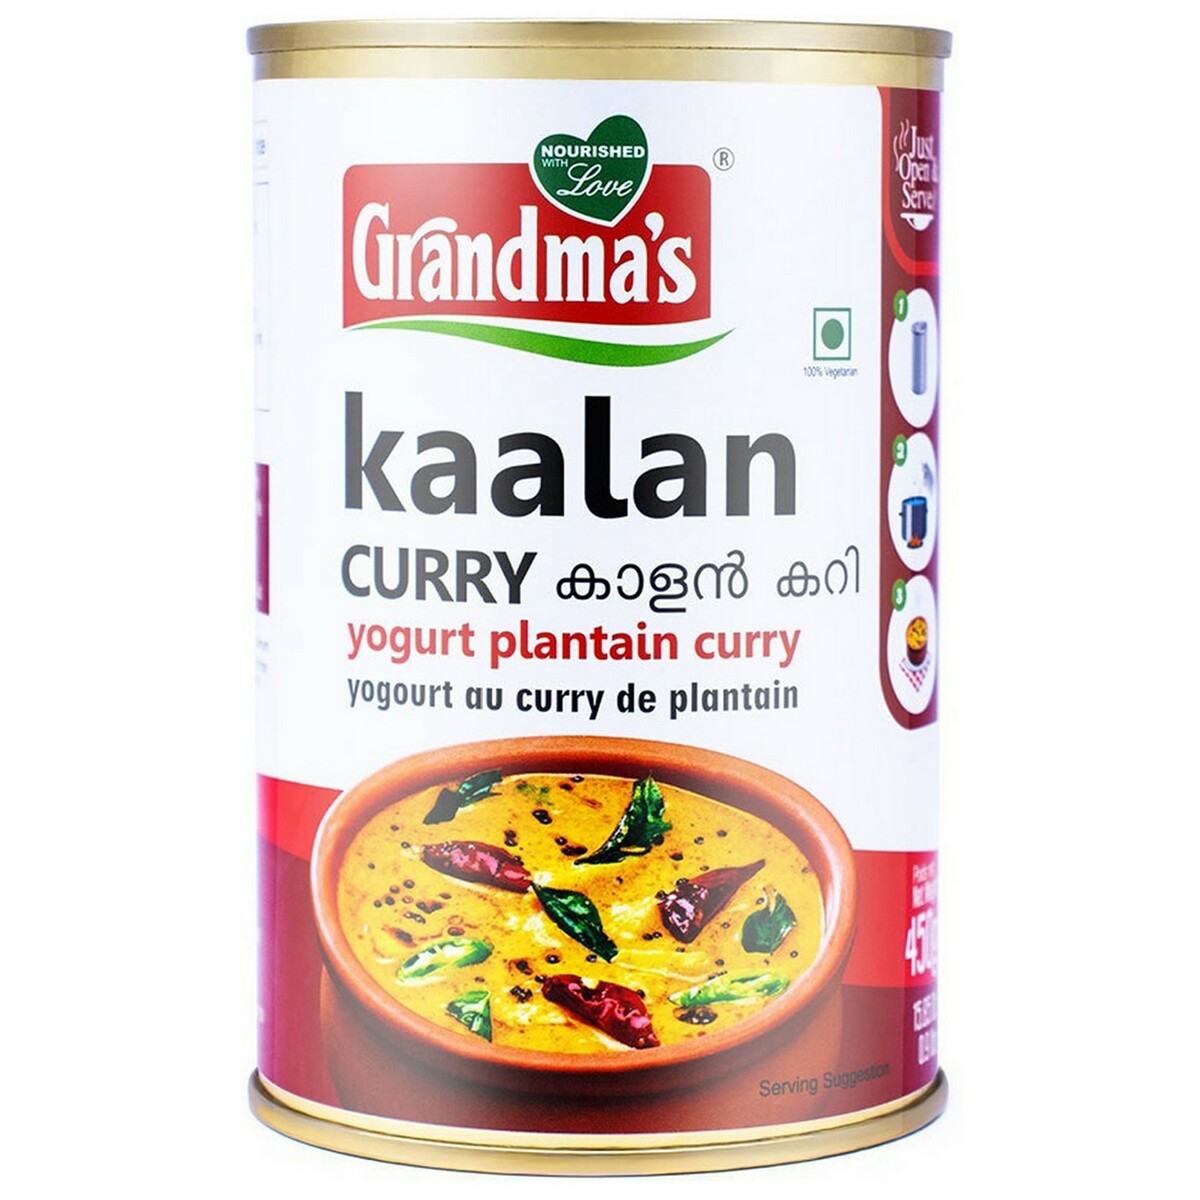 Grandmas Canned  Kalan Curry  450G